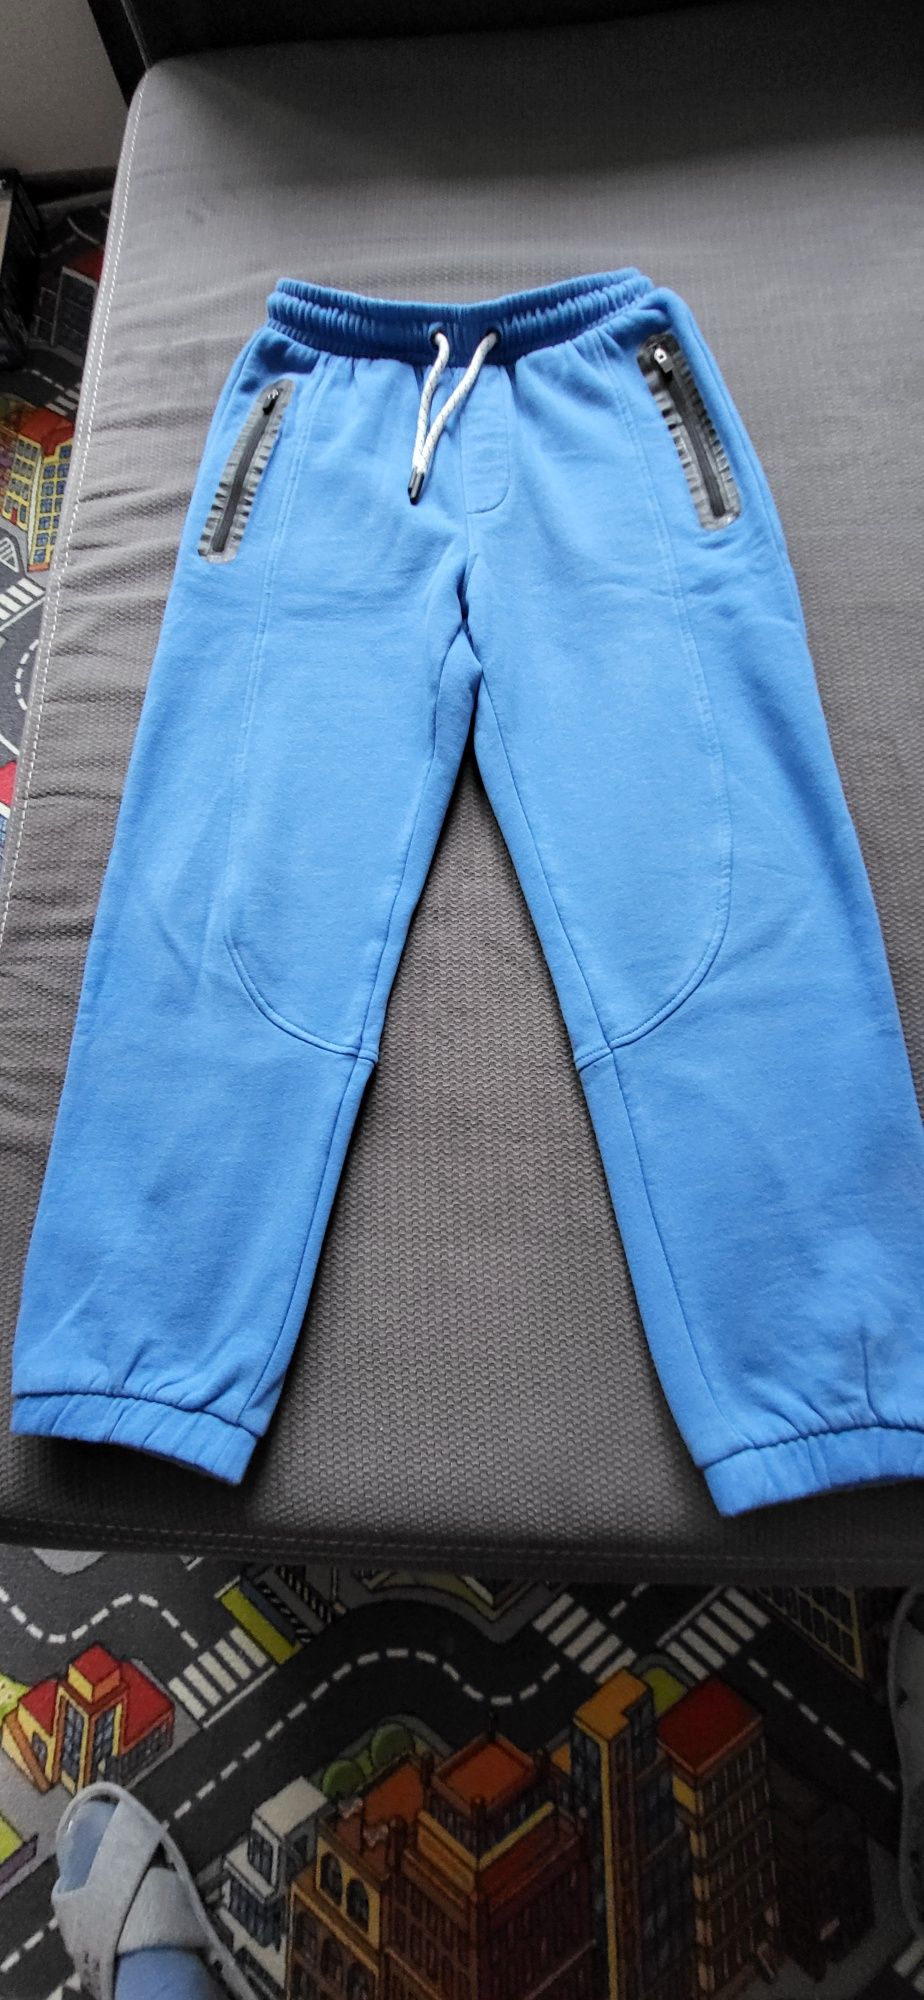 Bluza 4F, bluzki, spodnie Reserved r.146 - 5 szt.